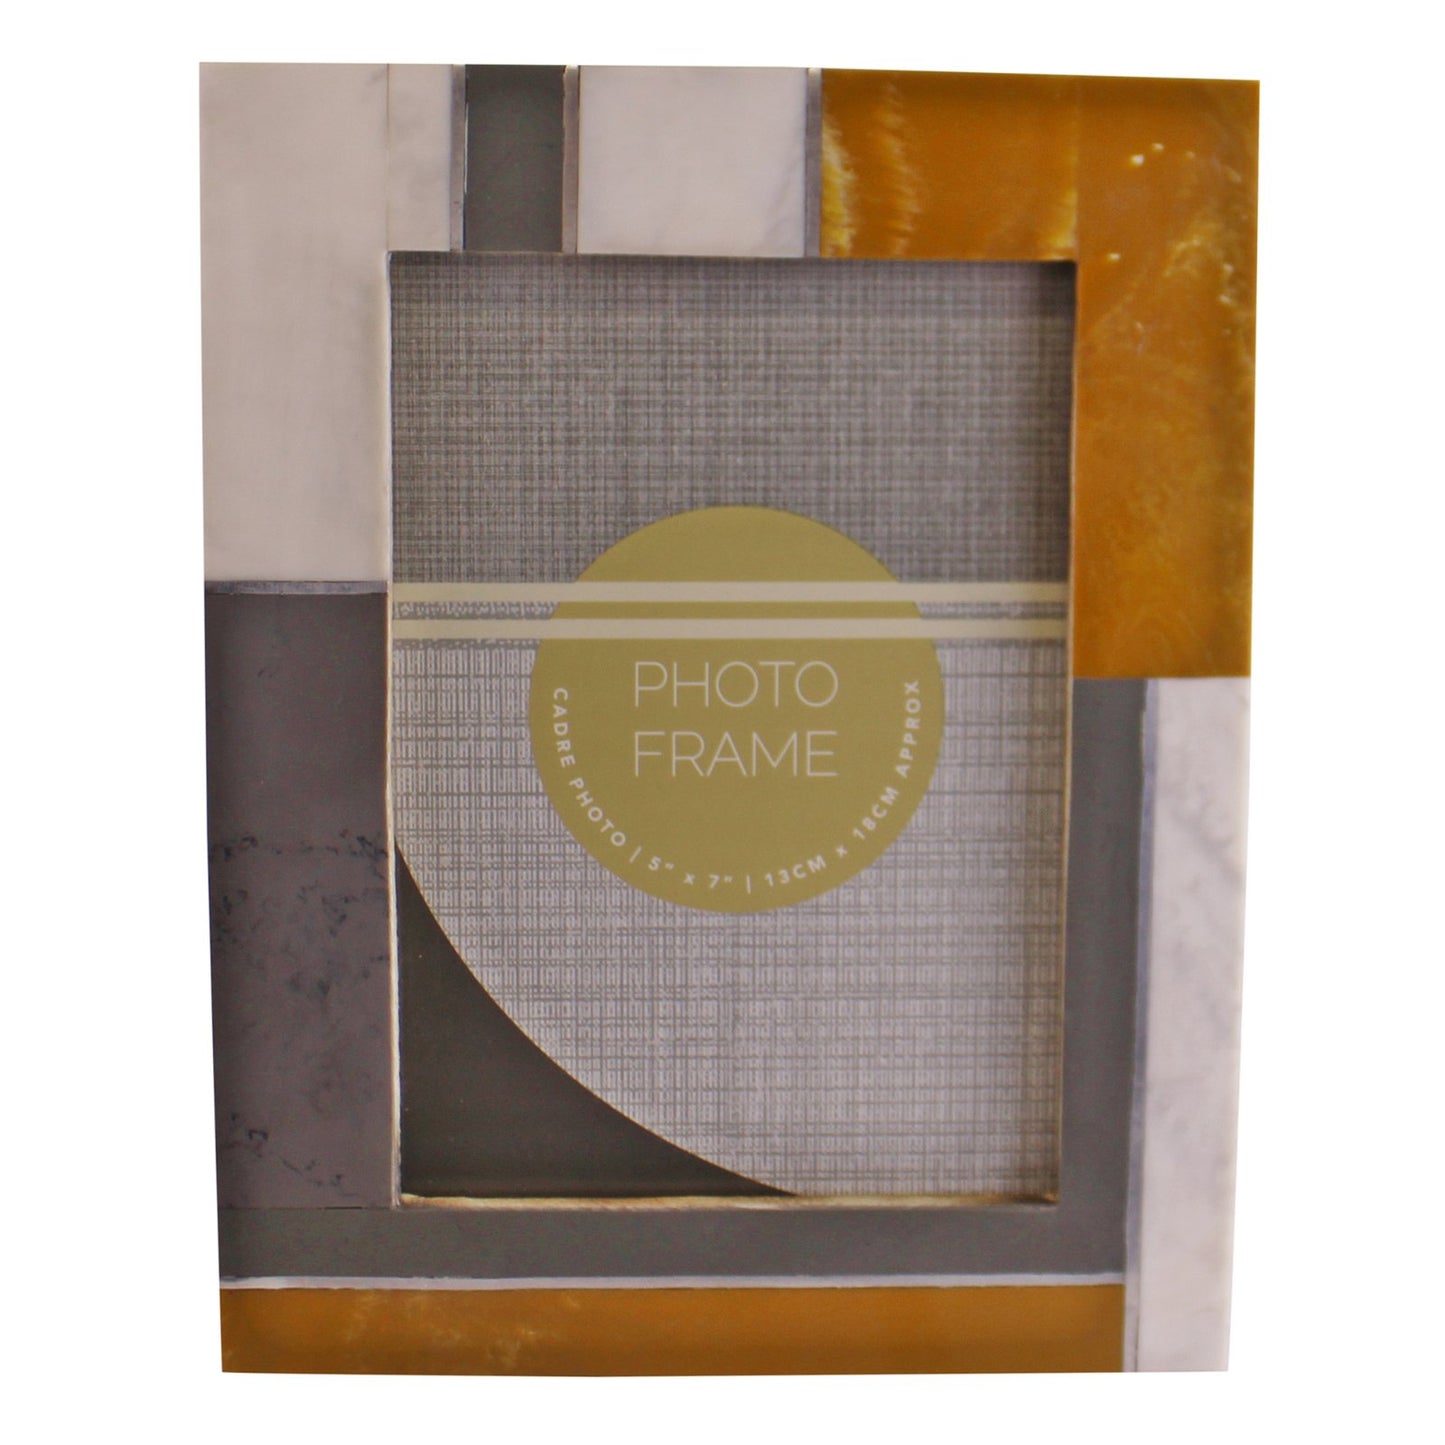 Set of 3 Abstract Design Photo Frames, 5x7 - Kaftan direct